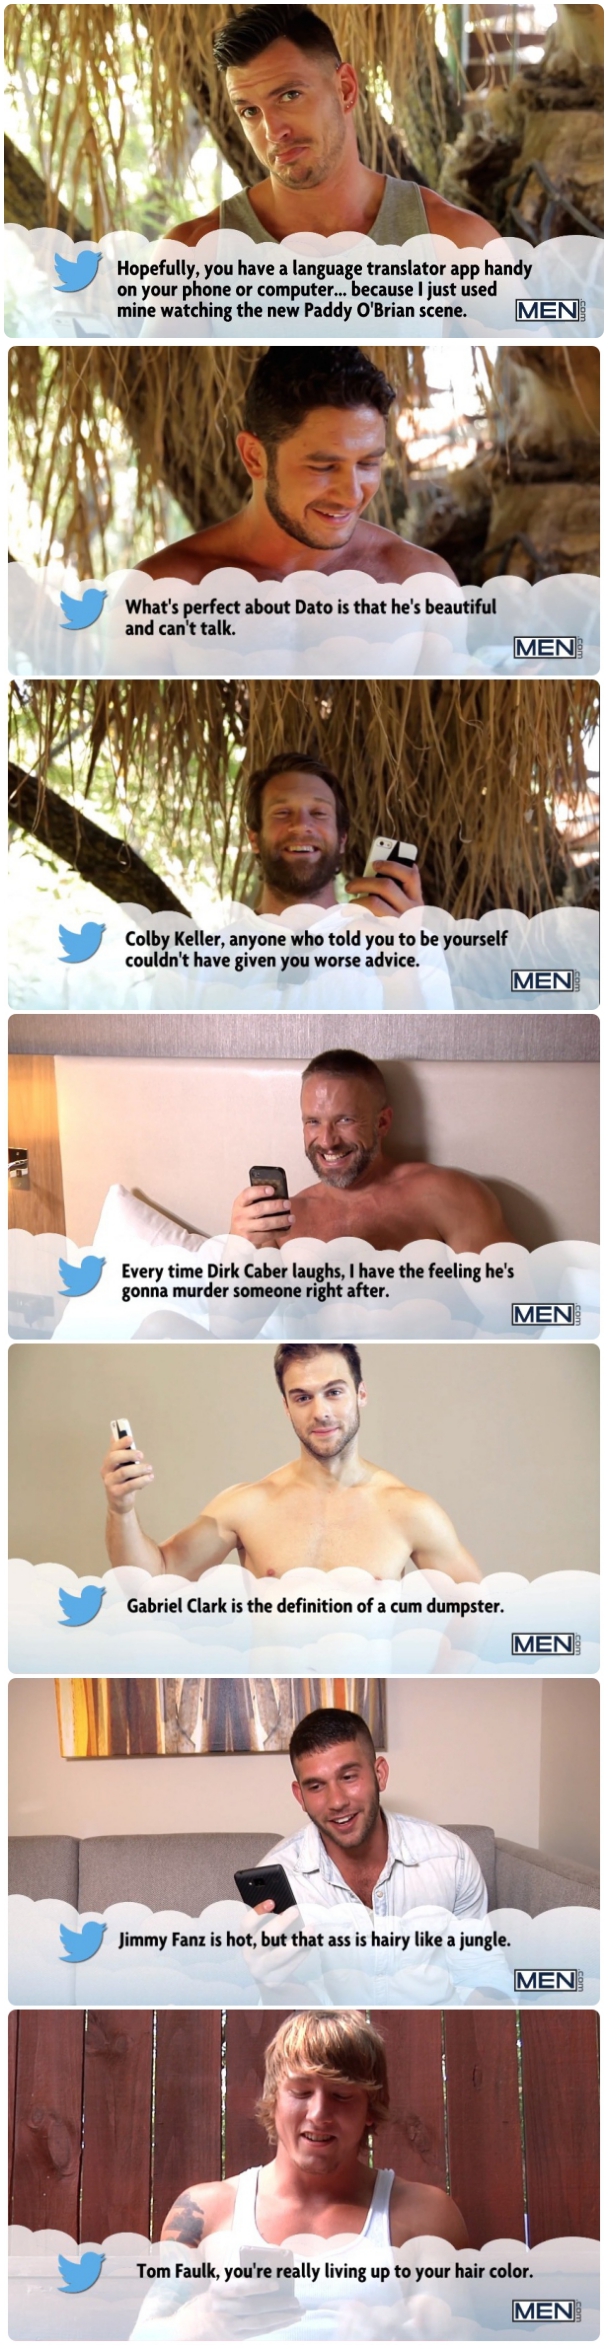 gay-porn-stars-read-mean-tweets-dato-foland-colby-keller-jimmy-fanz-dirk-caber-tom-faulk-gabriel-clark